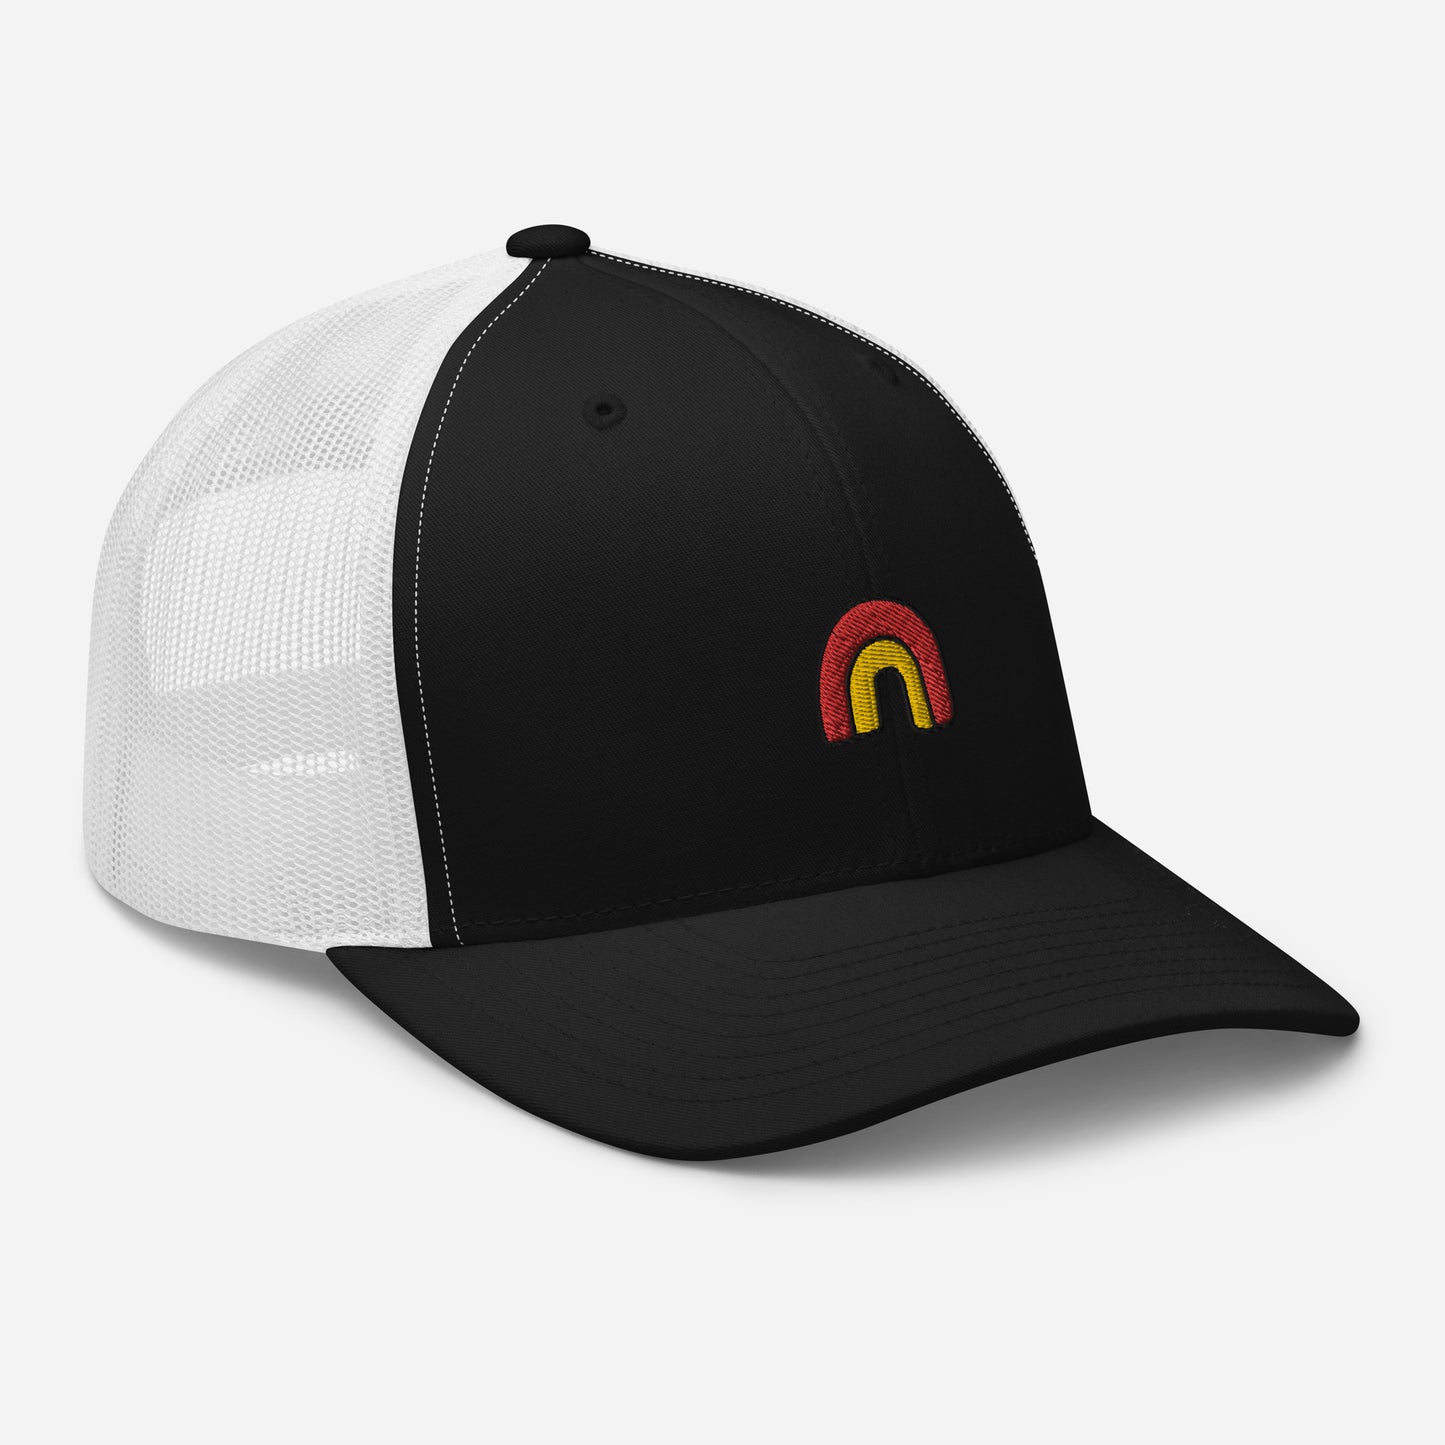 Mesh Cap with Rainbow Symbol